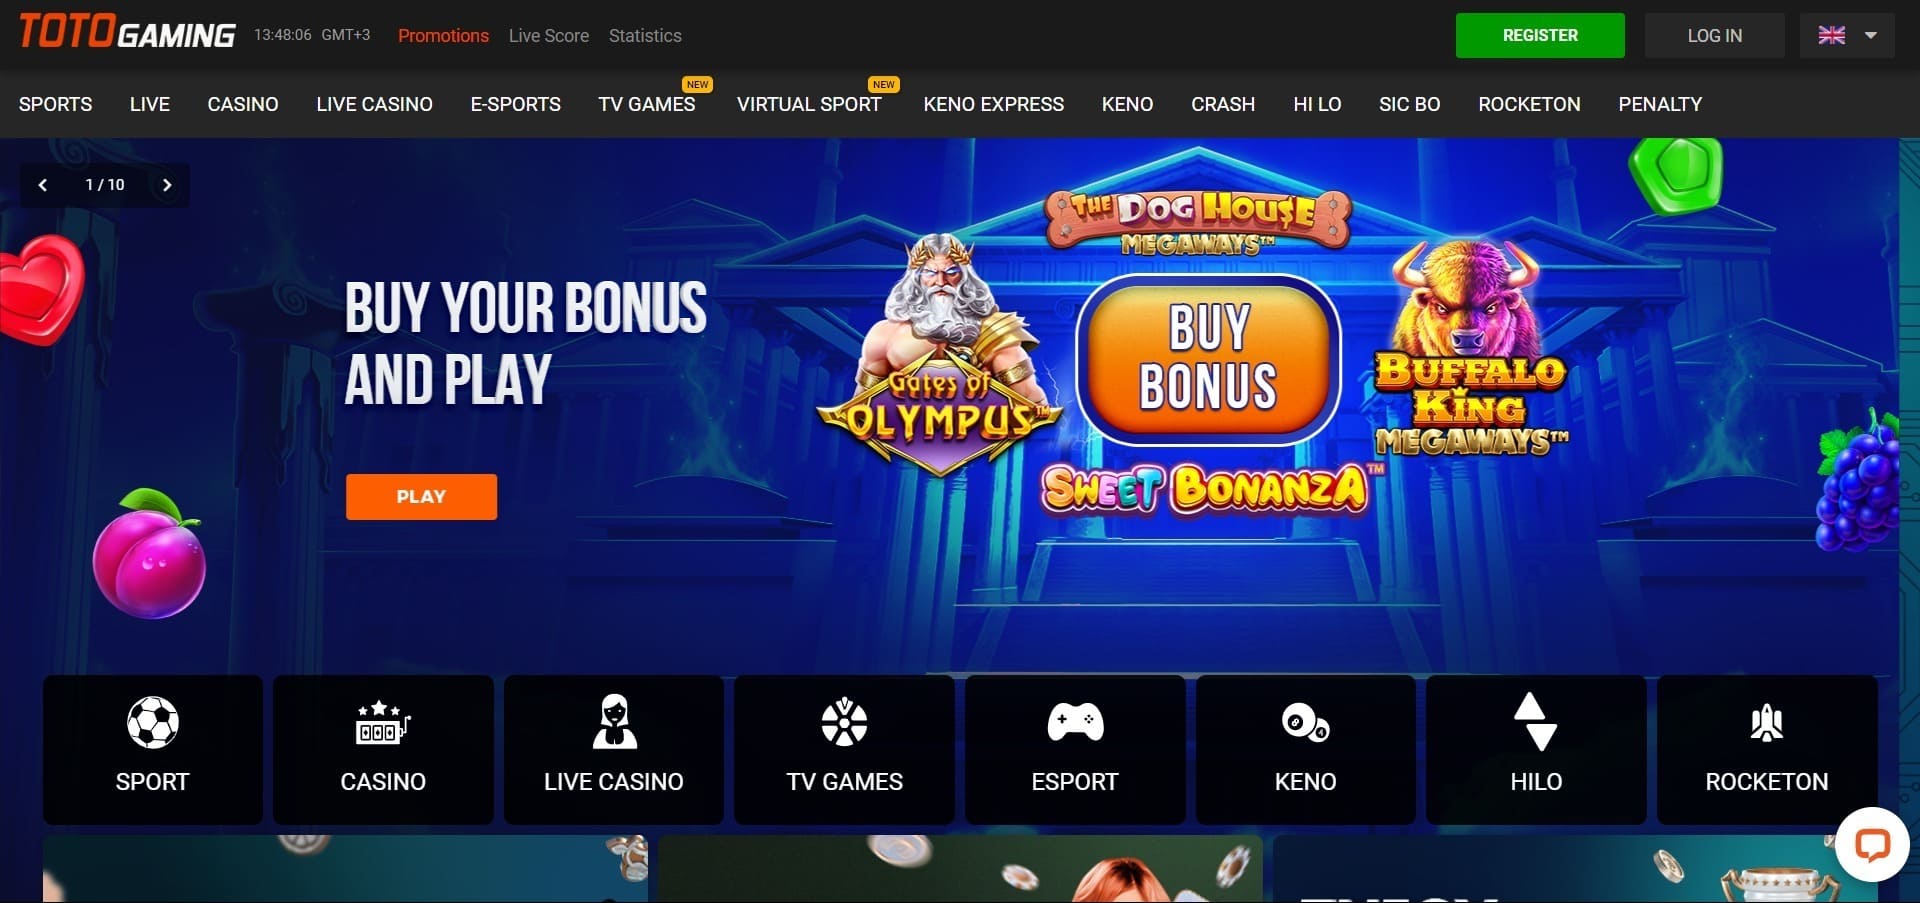 Totogaming Casino'nun resmi web sitesi